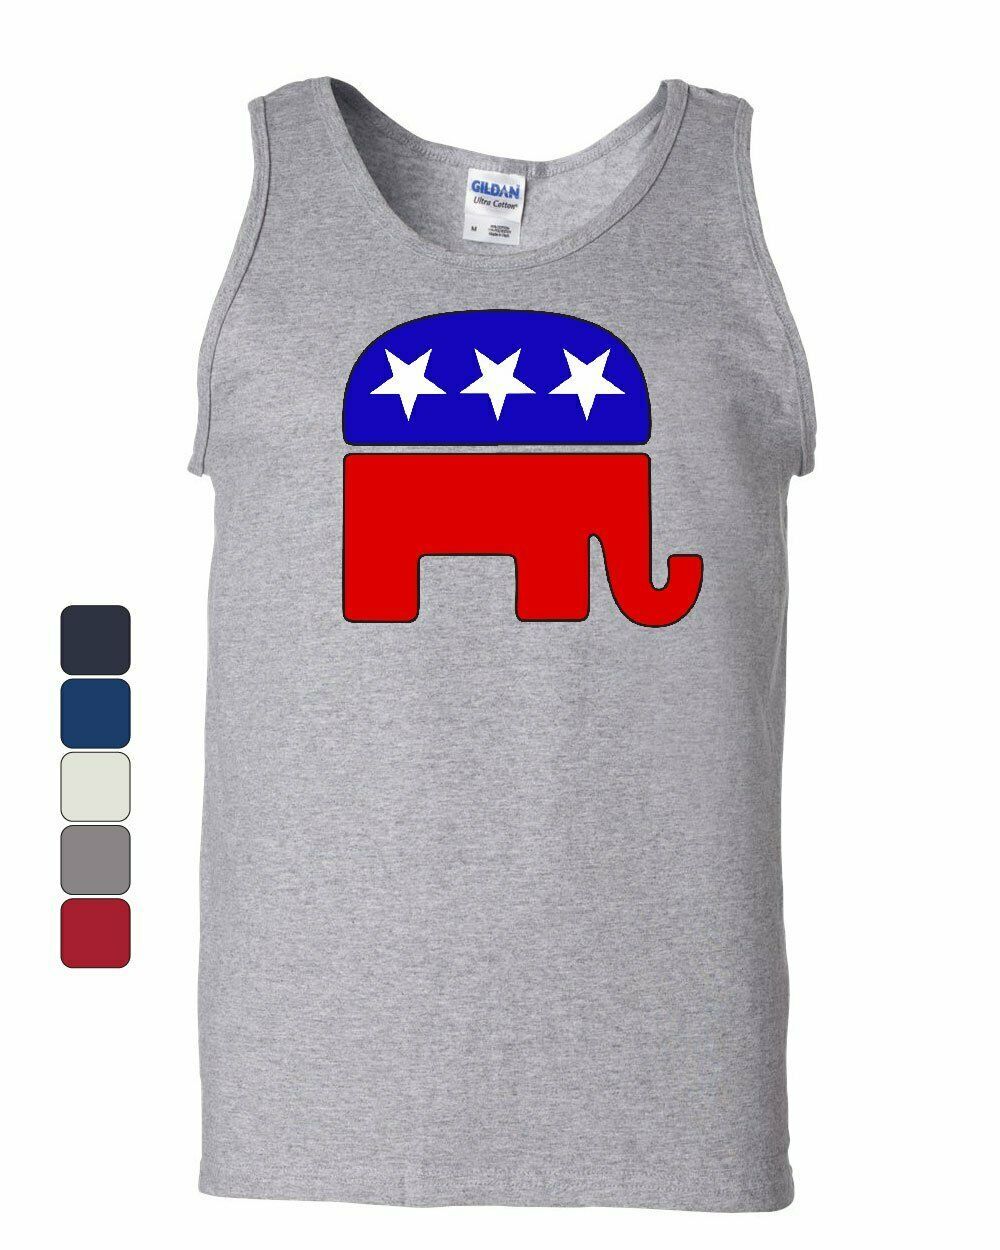 Republican Party Elephant Logo Tank Top Political Conservative Sleeveless